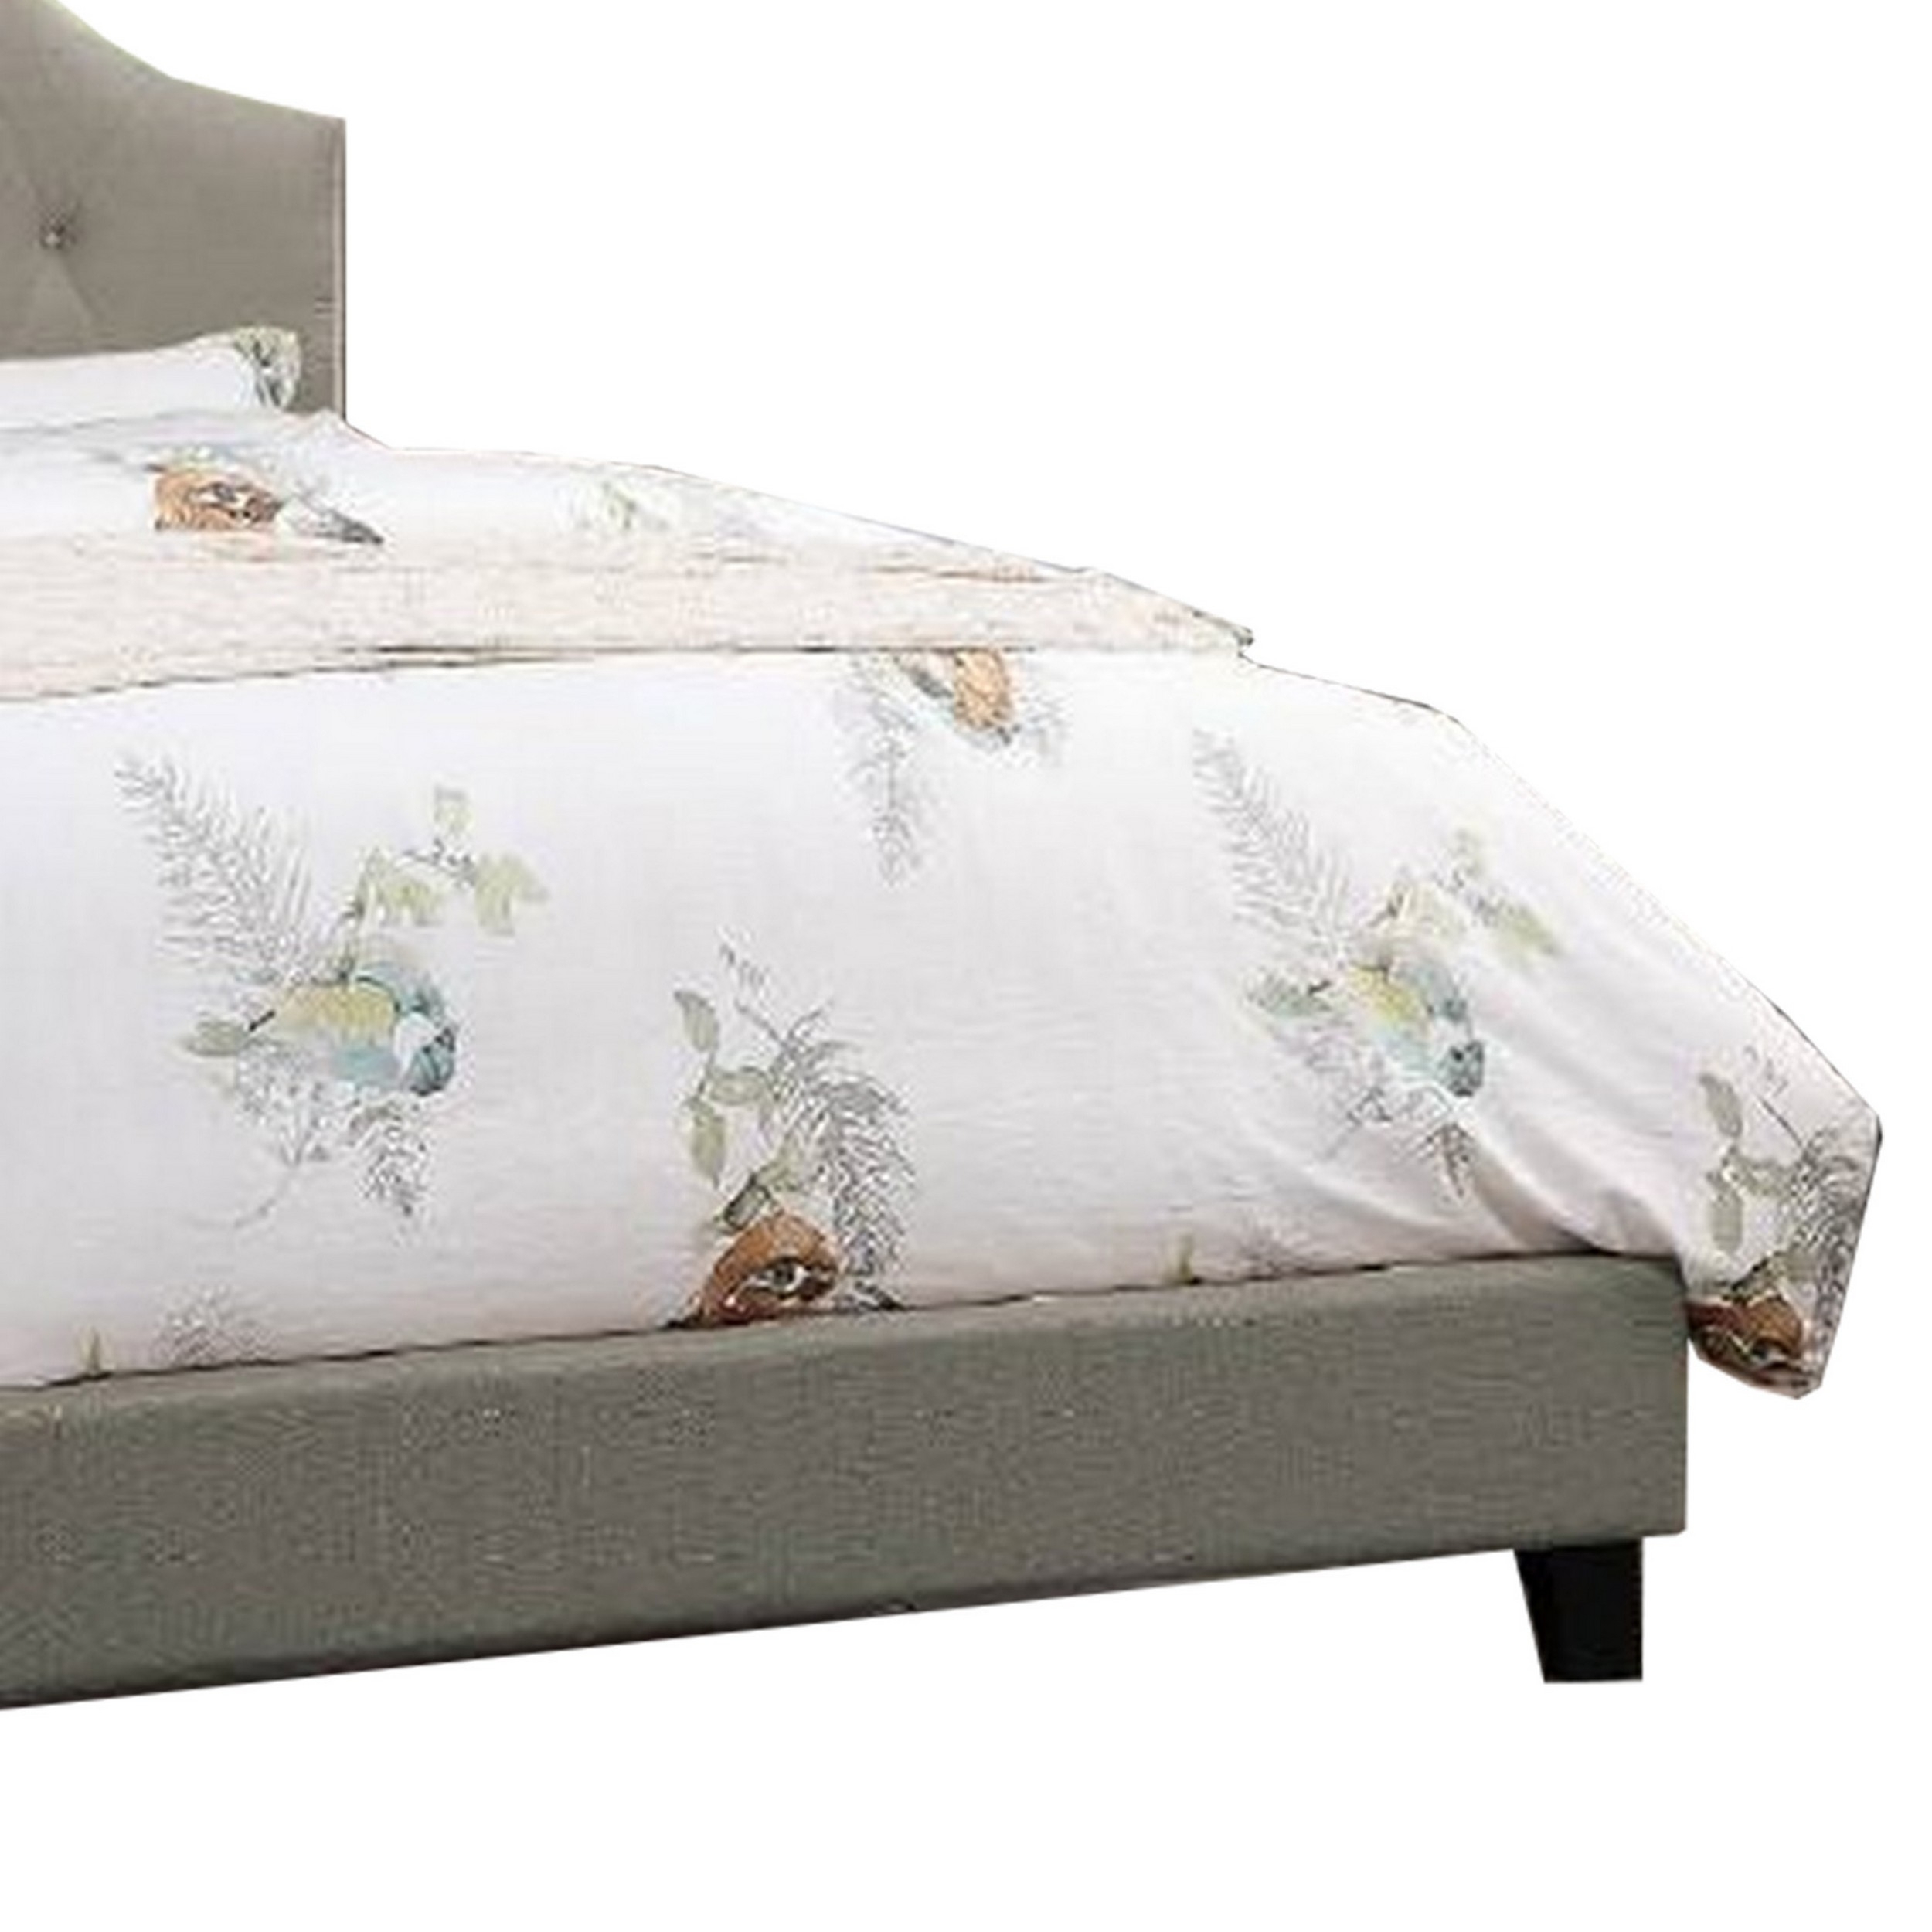 Eni Upholstered Full Size Bed, Tufted Adjustable Headboard, Gray Fabric- Saltoro Sherpi